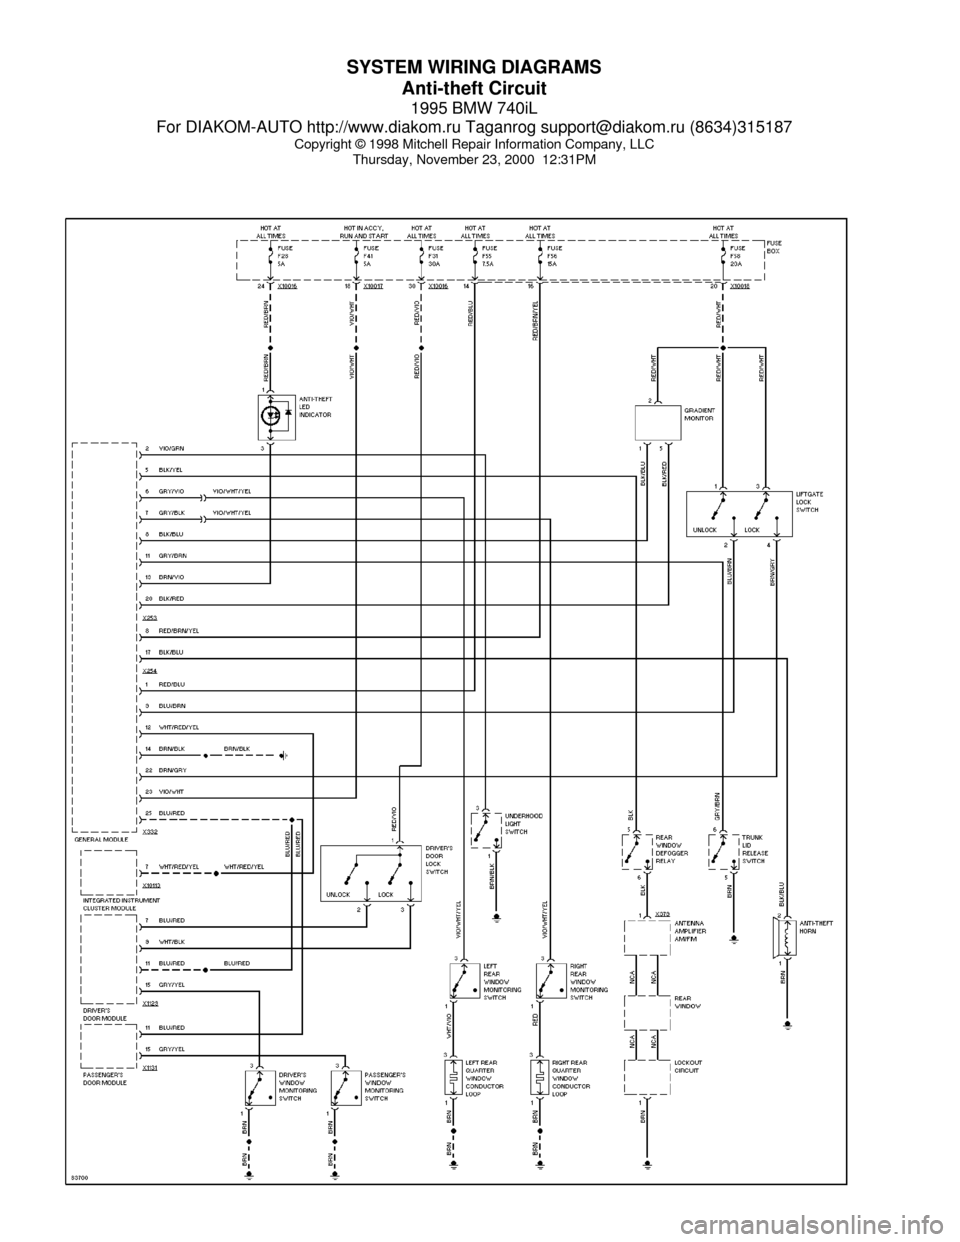 BMW 740il 1995 E38 System Wiring Diagrams SYSTEM WIRING DIAGRAMS
Anti-theft Circuit
1995 BMW 740iL
For DIAKOM-AUTO http://www.diakom.ru Taganrog support@diakom.ru (8634)315187
Copyright © 1998 Mitchell Repair Information Company, LLC
Thursda